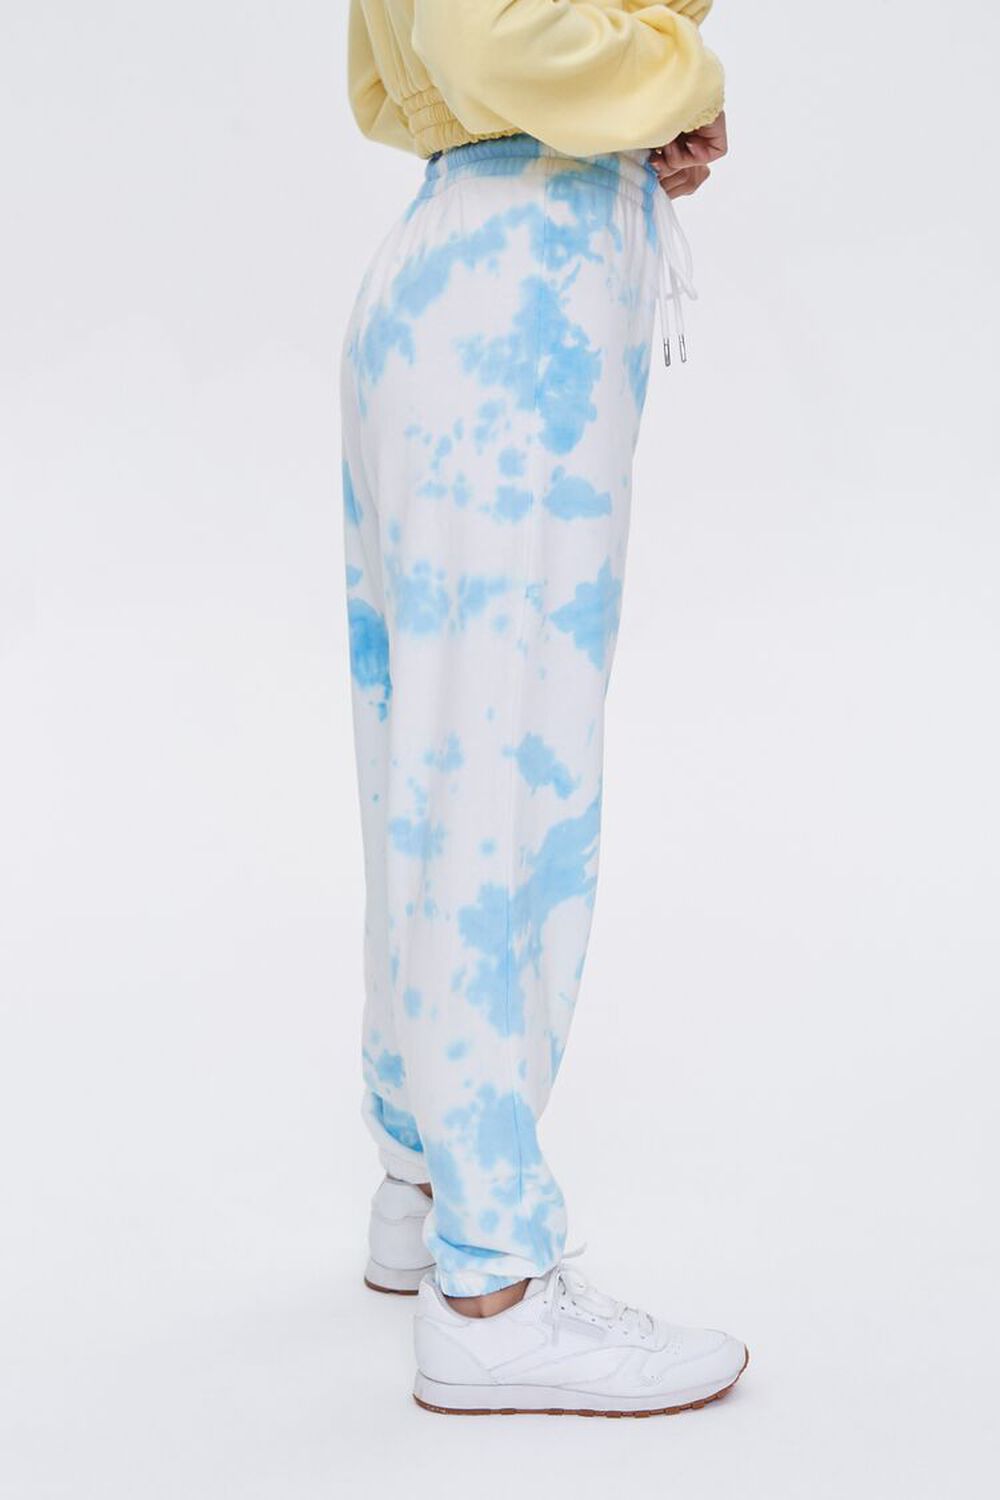 BLUE/MULTI Tie-Dye French Terry Sweatpants, image 3